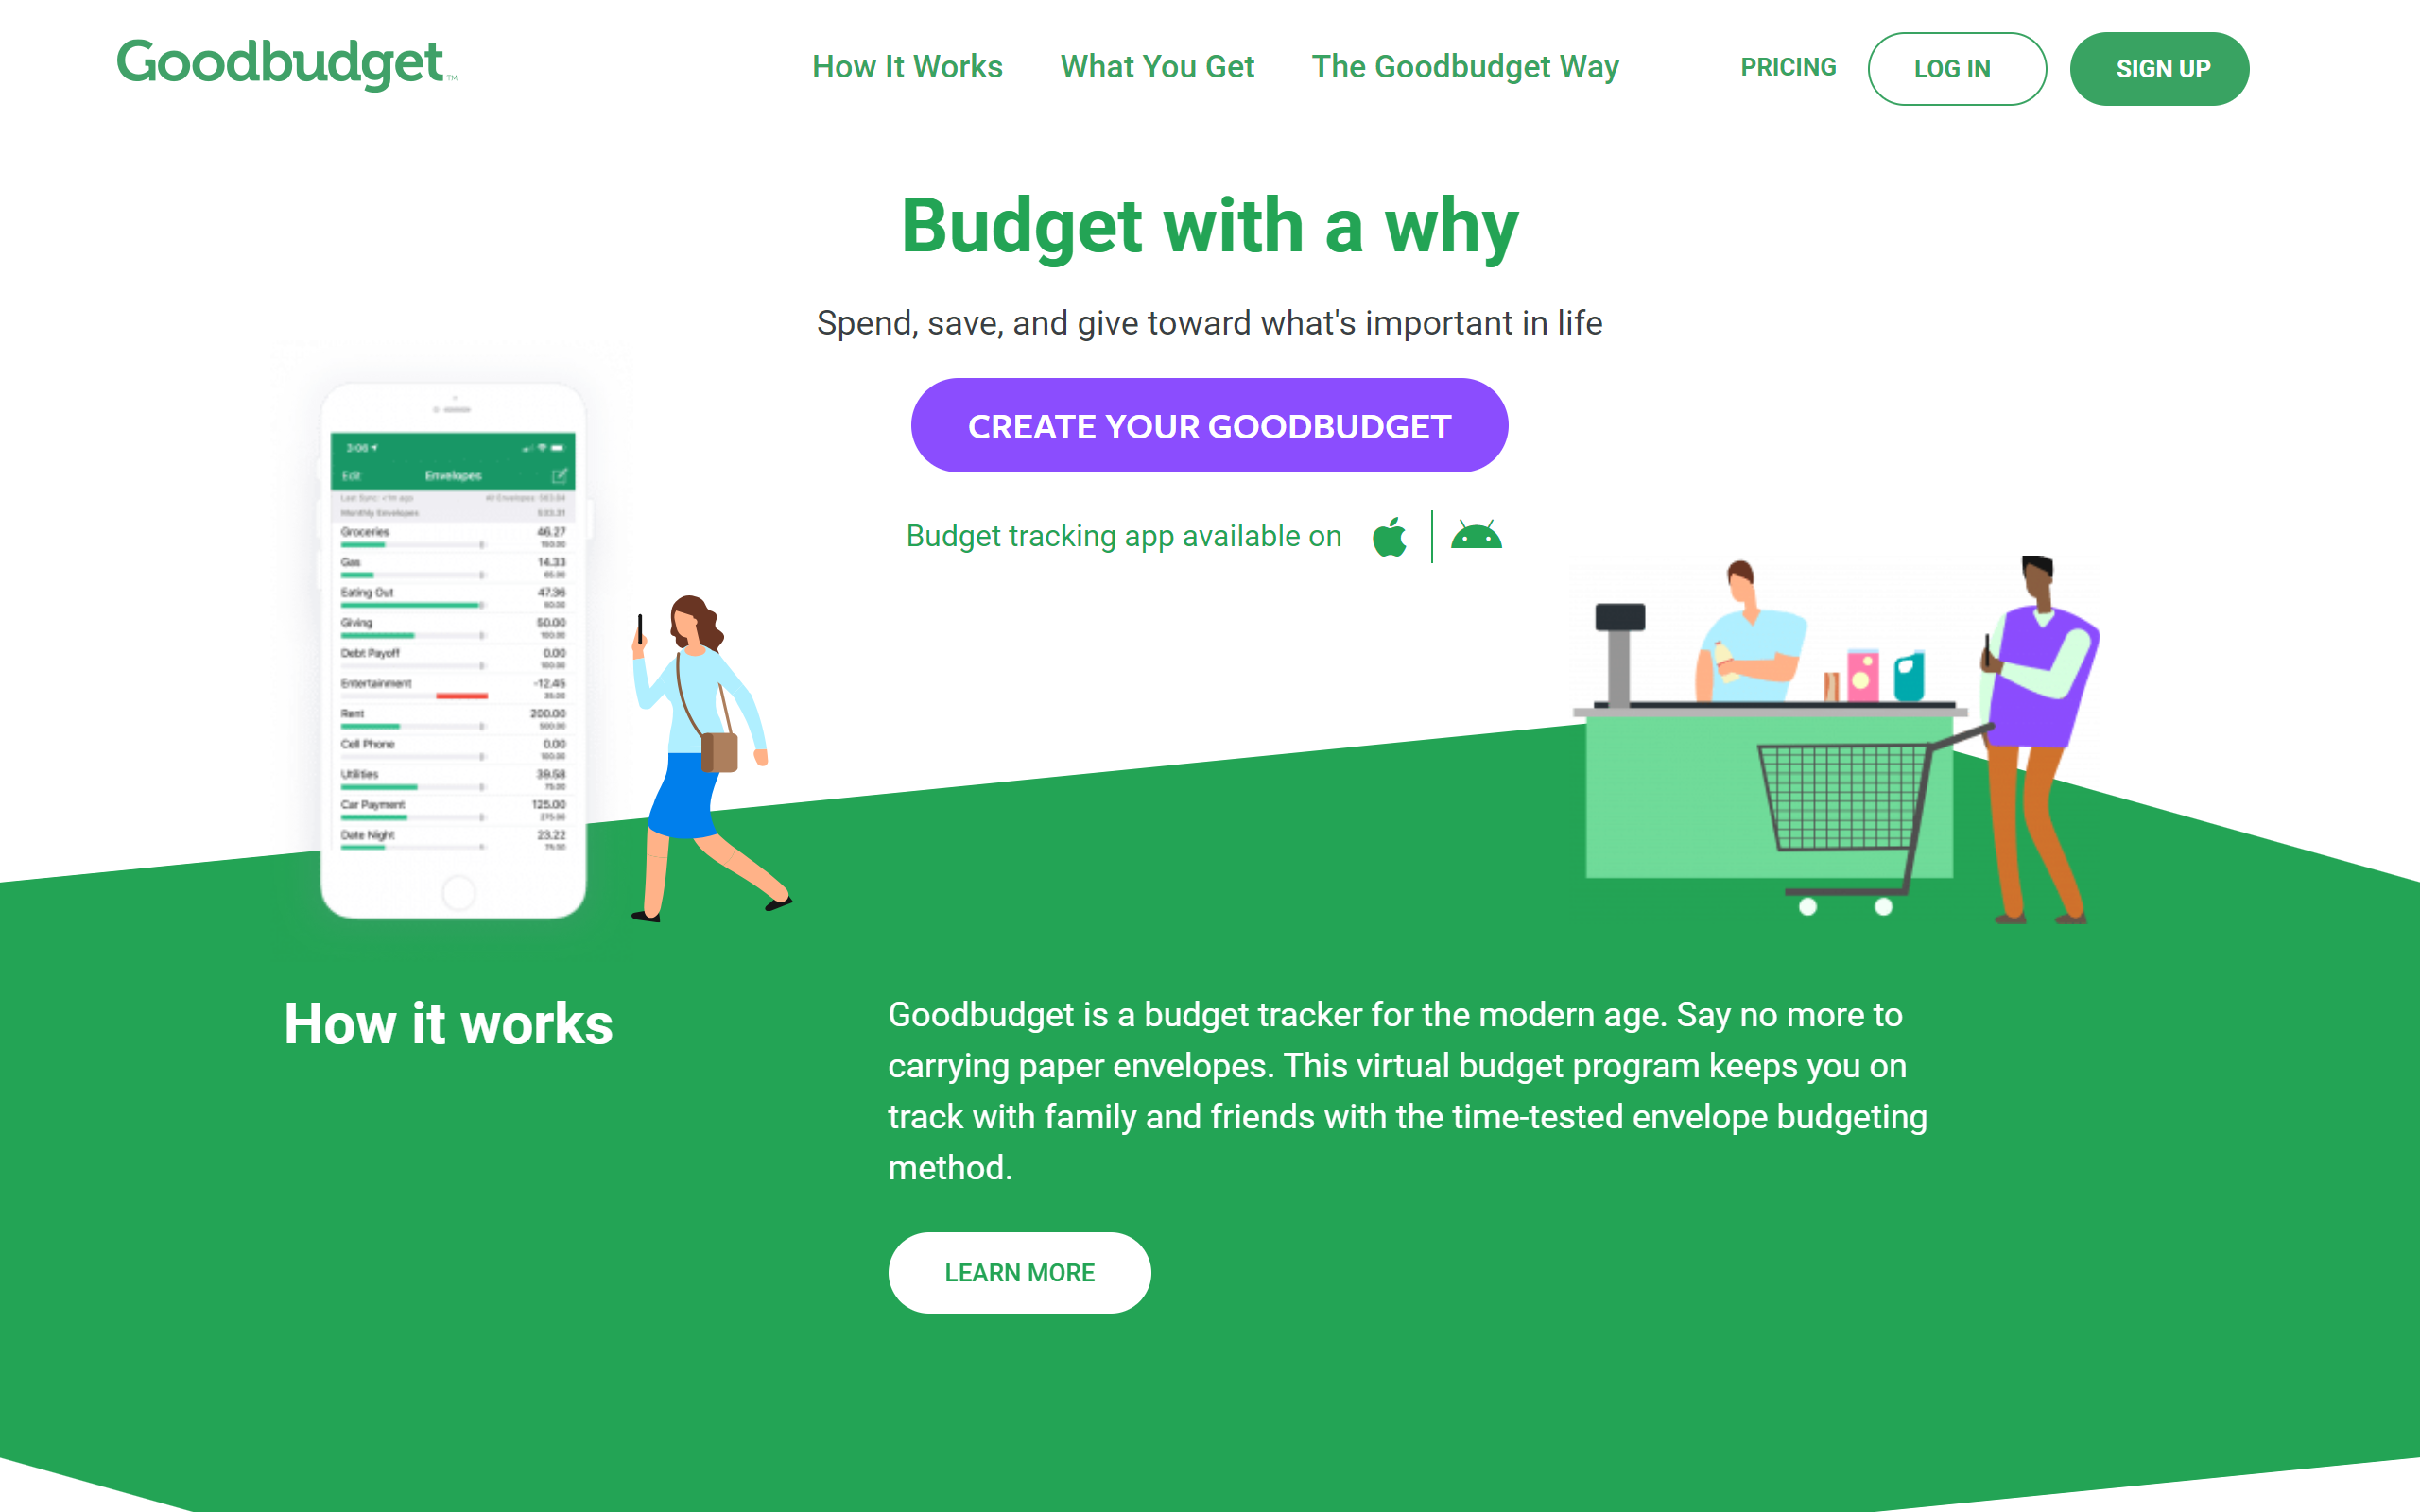 Goodbudget budgeting app